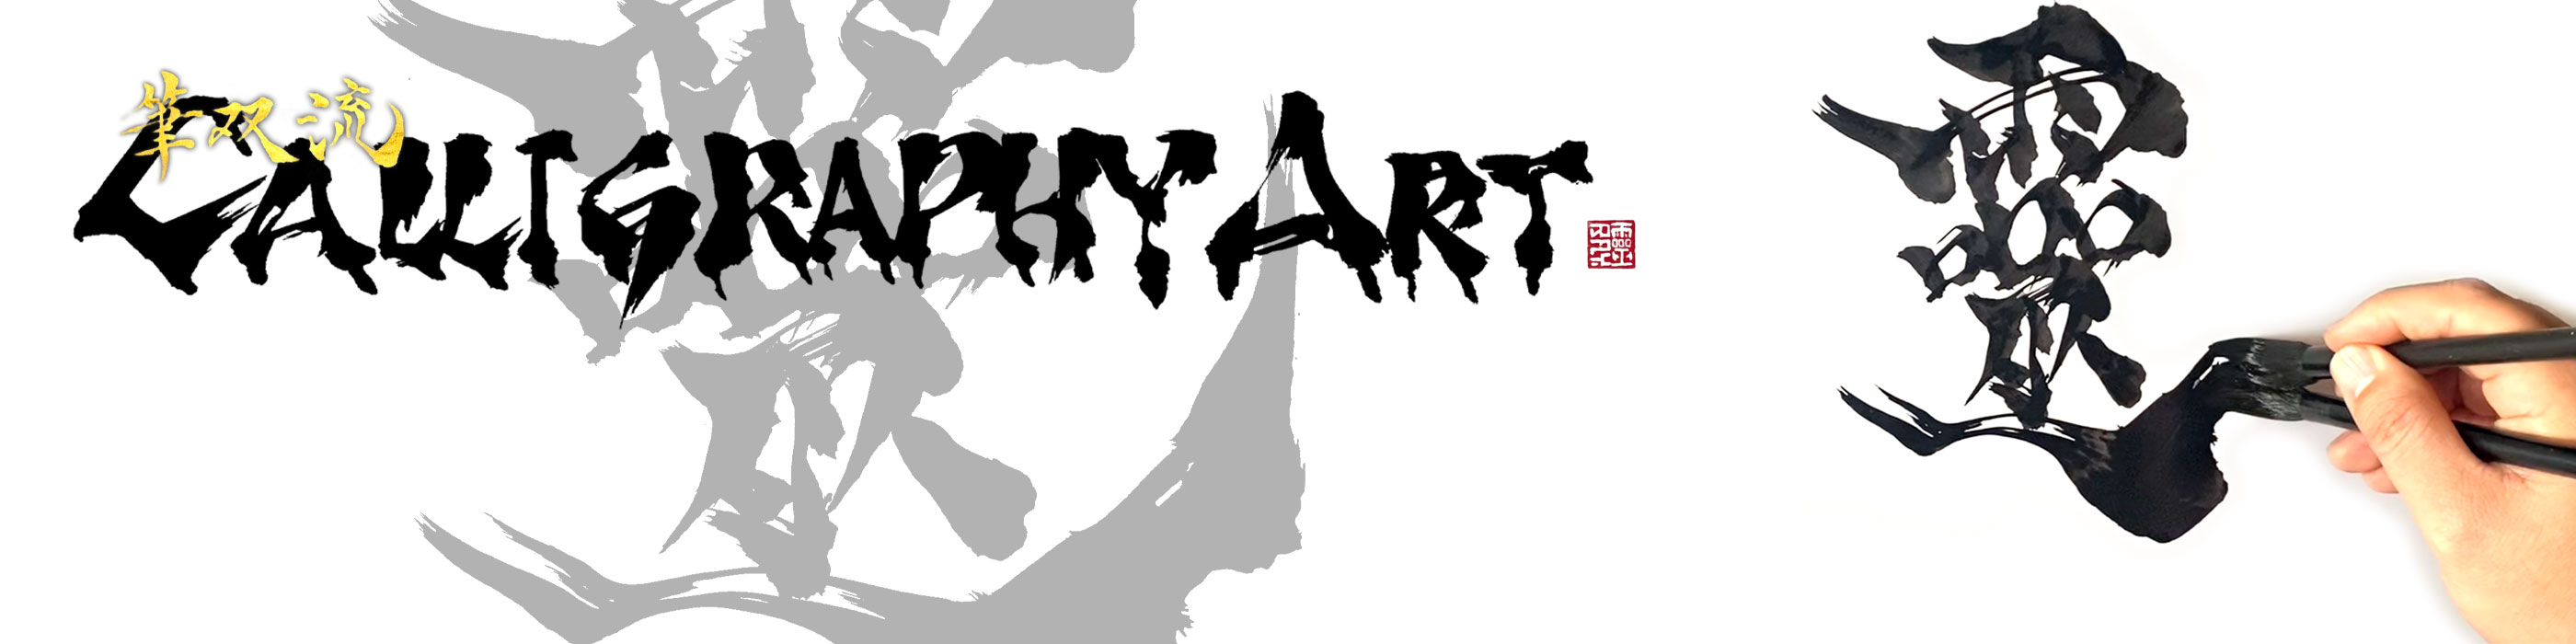 Ray_CalligraphyArt banner